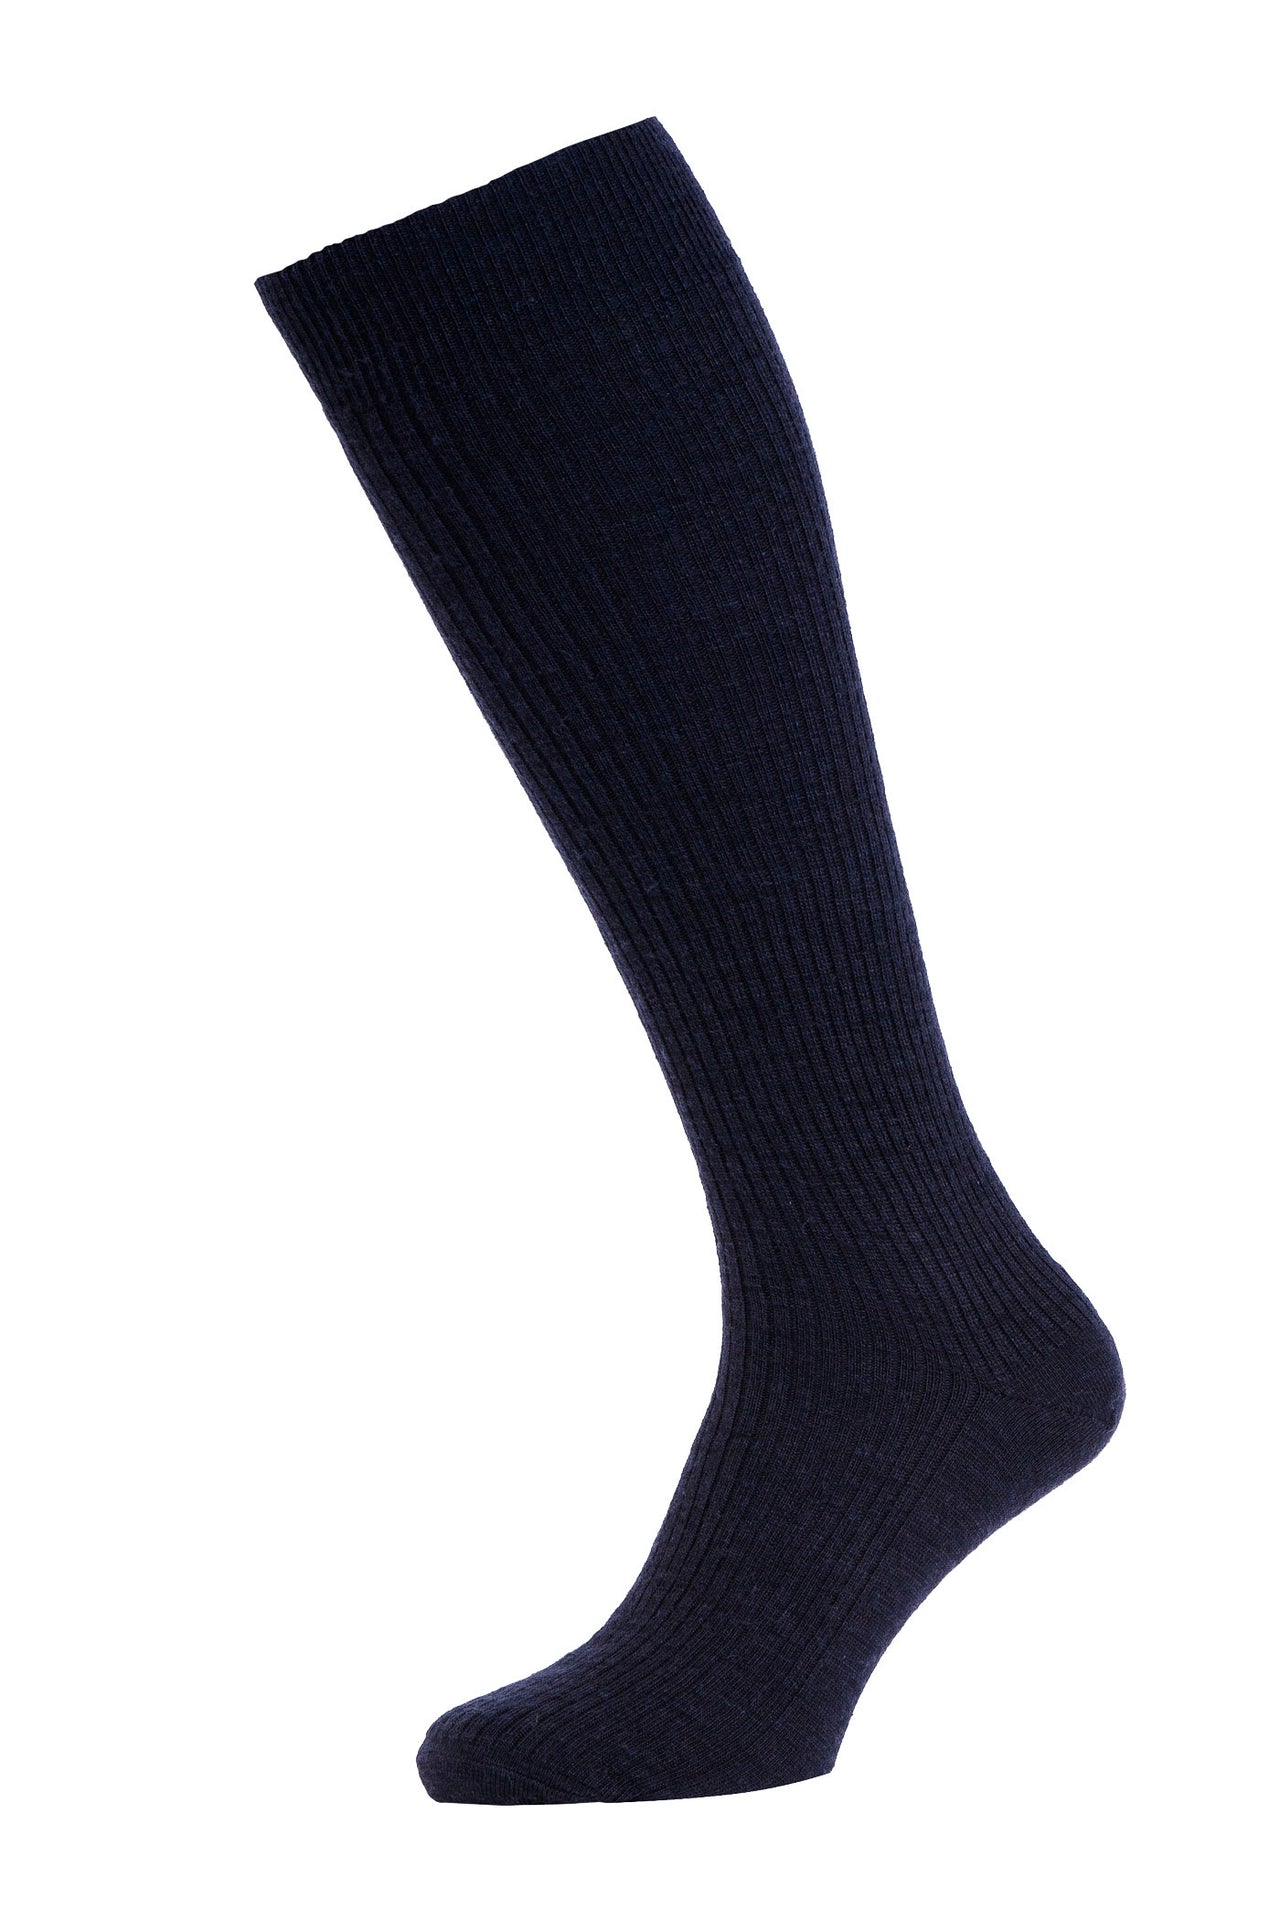 HJ Hall Immaculate Wool Long Socks